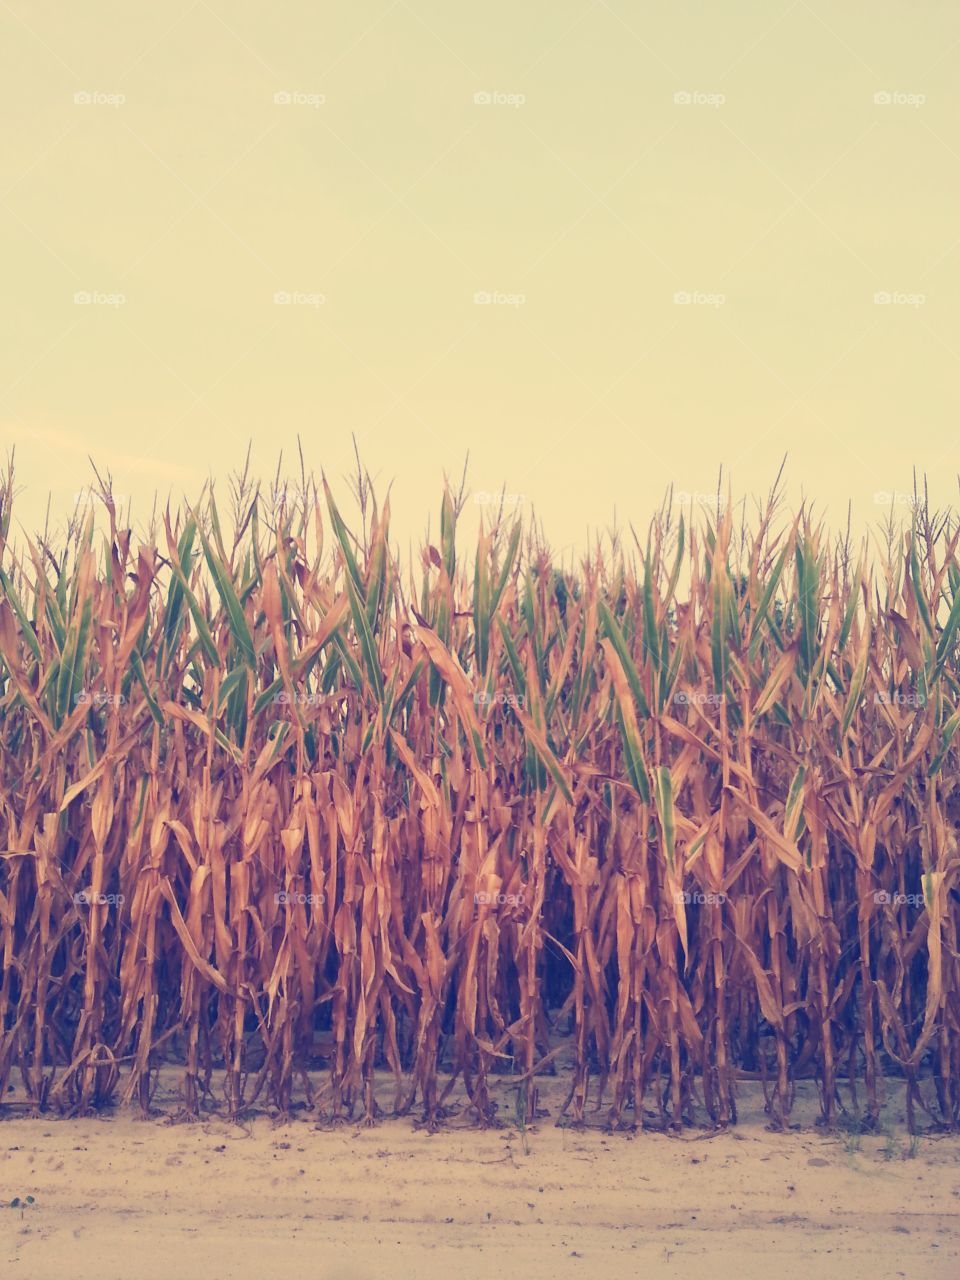 corn field. golden pretty corn field